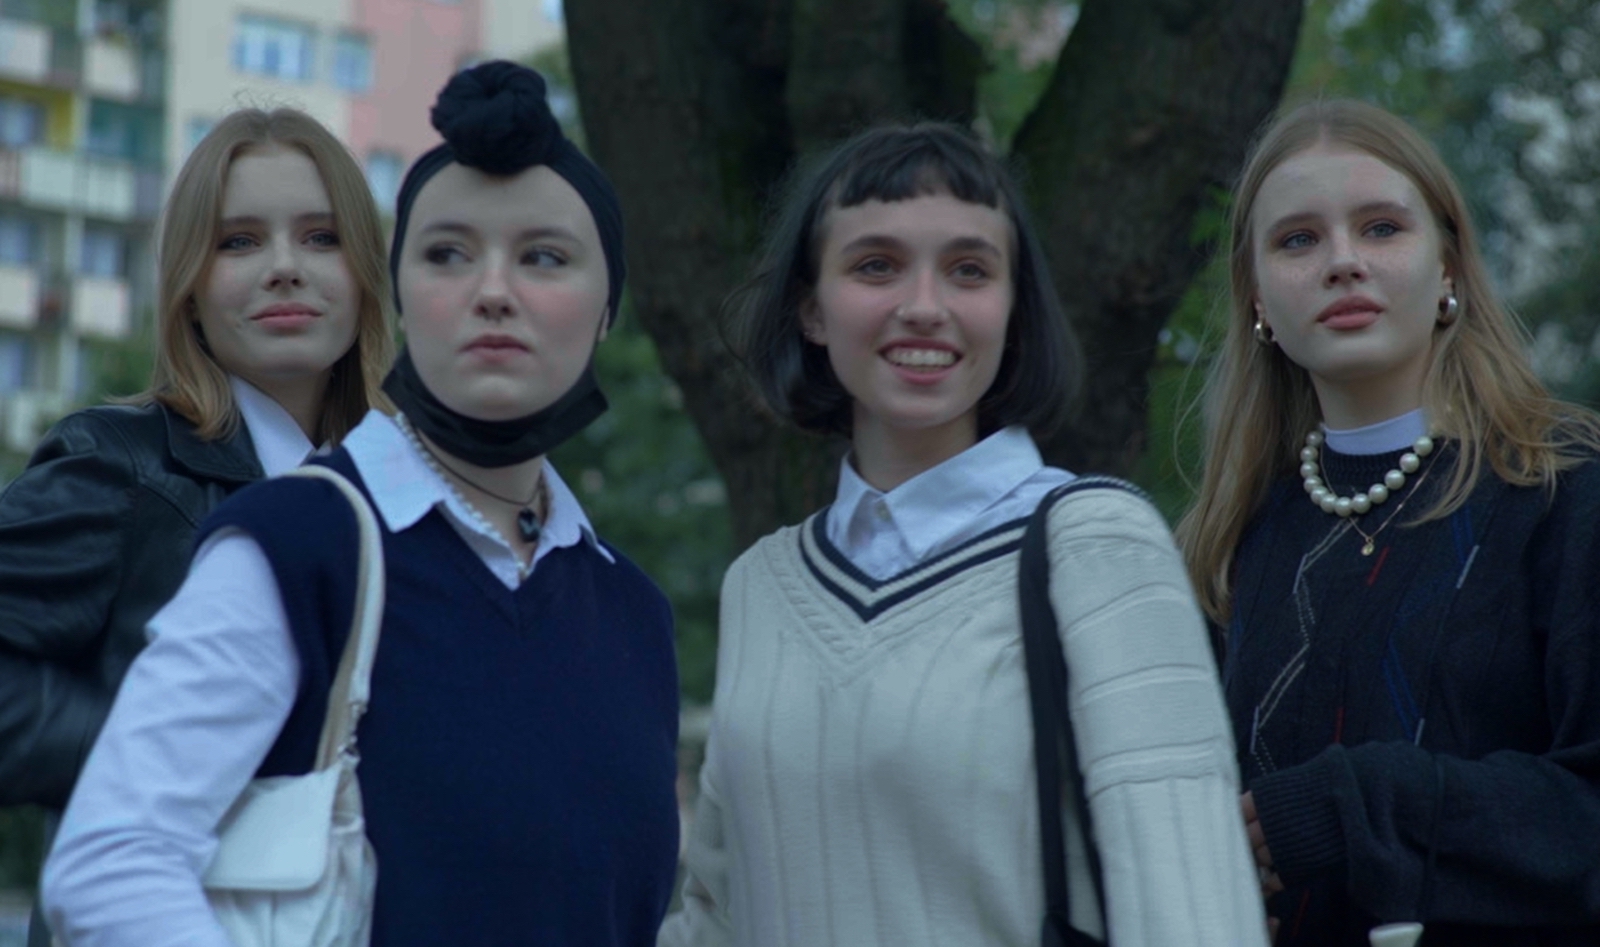 Four teenage girls look towards camera